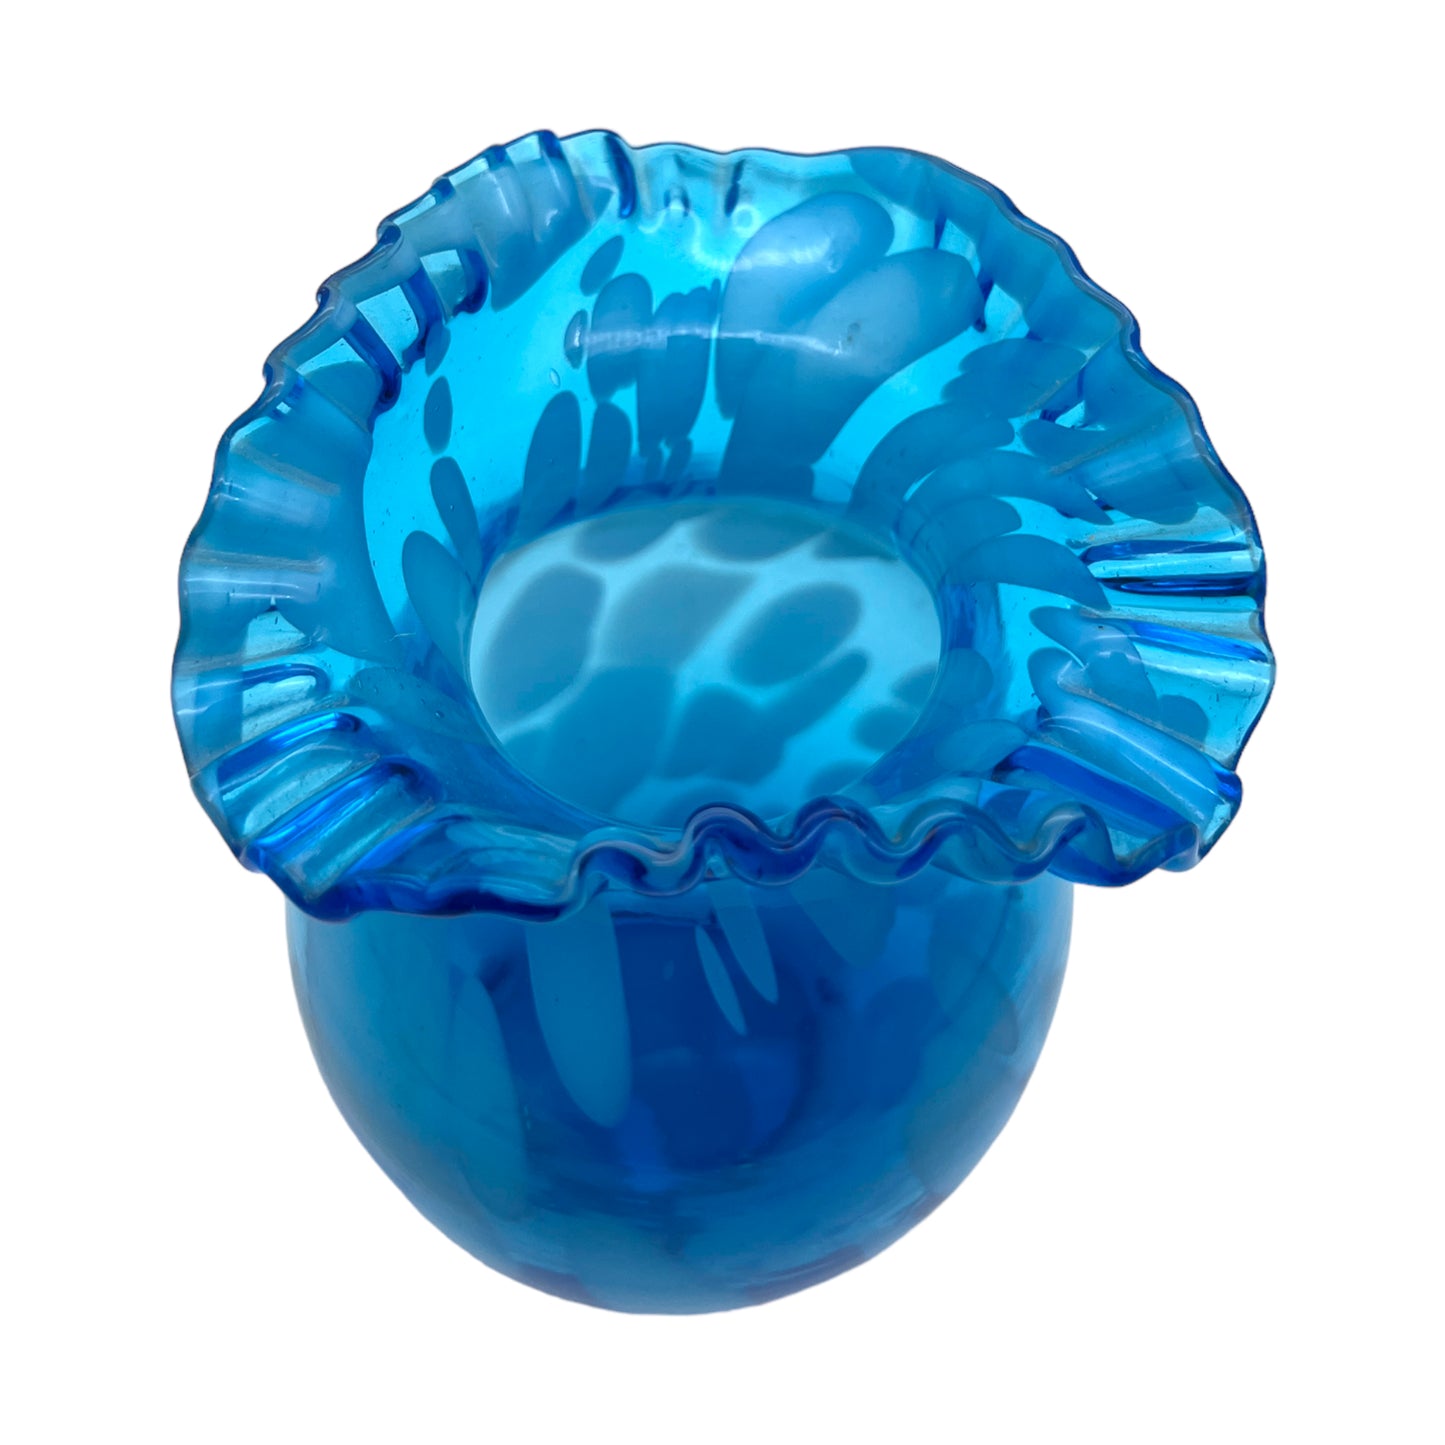 Splatterwave - Handcrafted Blue & White Optic Blown Glass Vase (9")